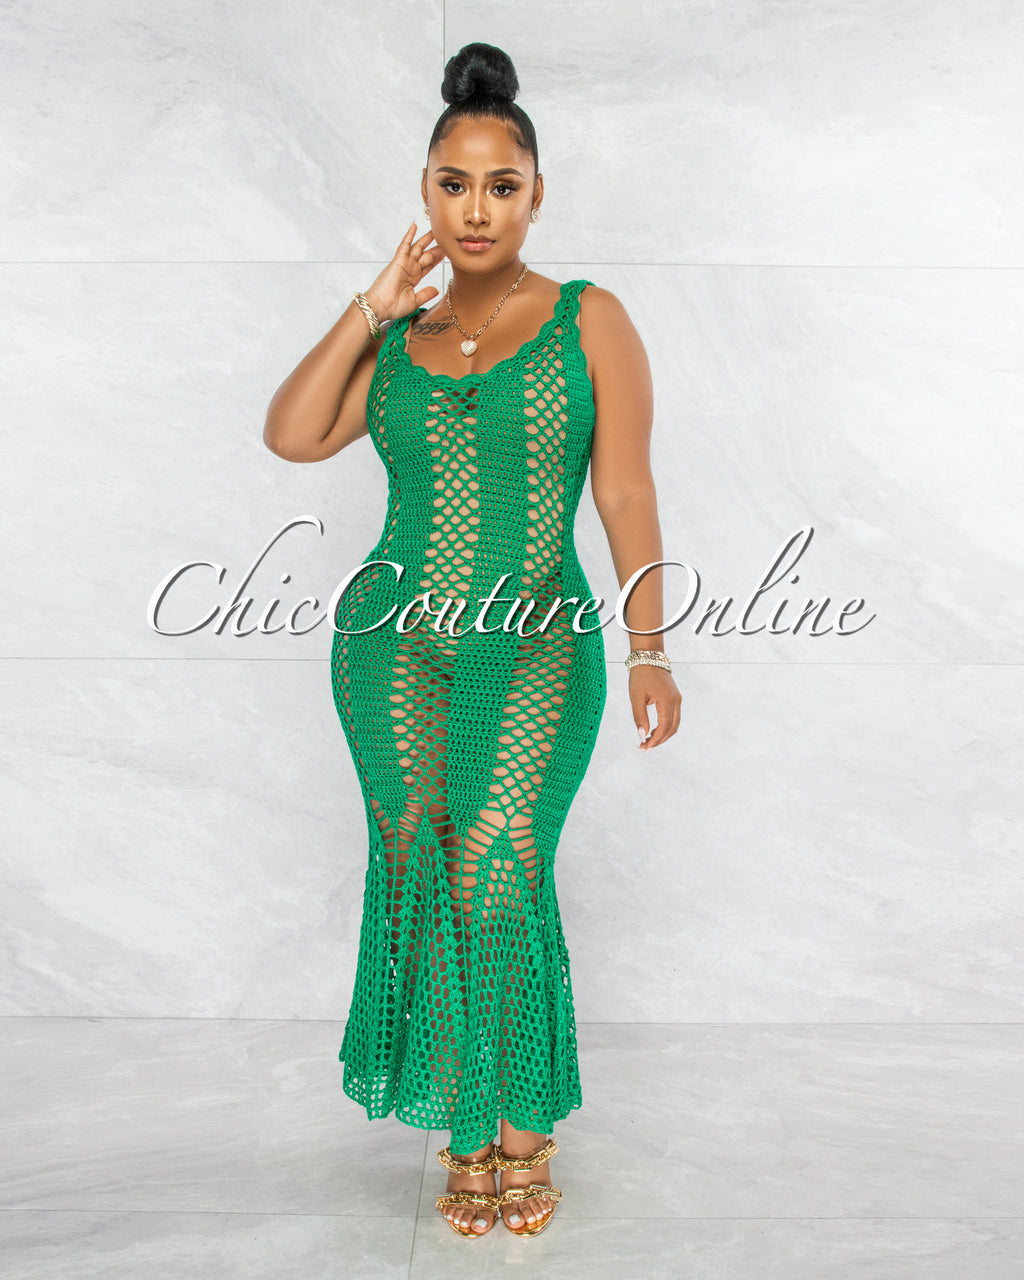 *Simoneta Emerald Green Crochet Cover-Up Maxi Dress